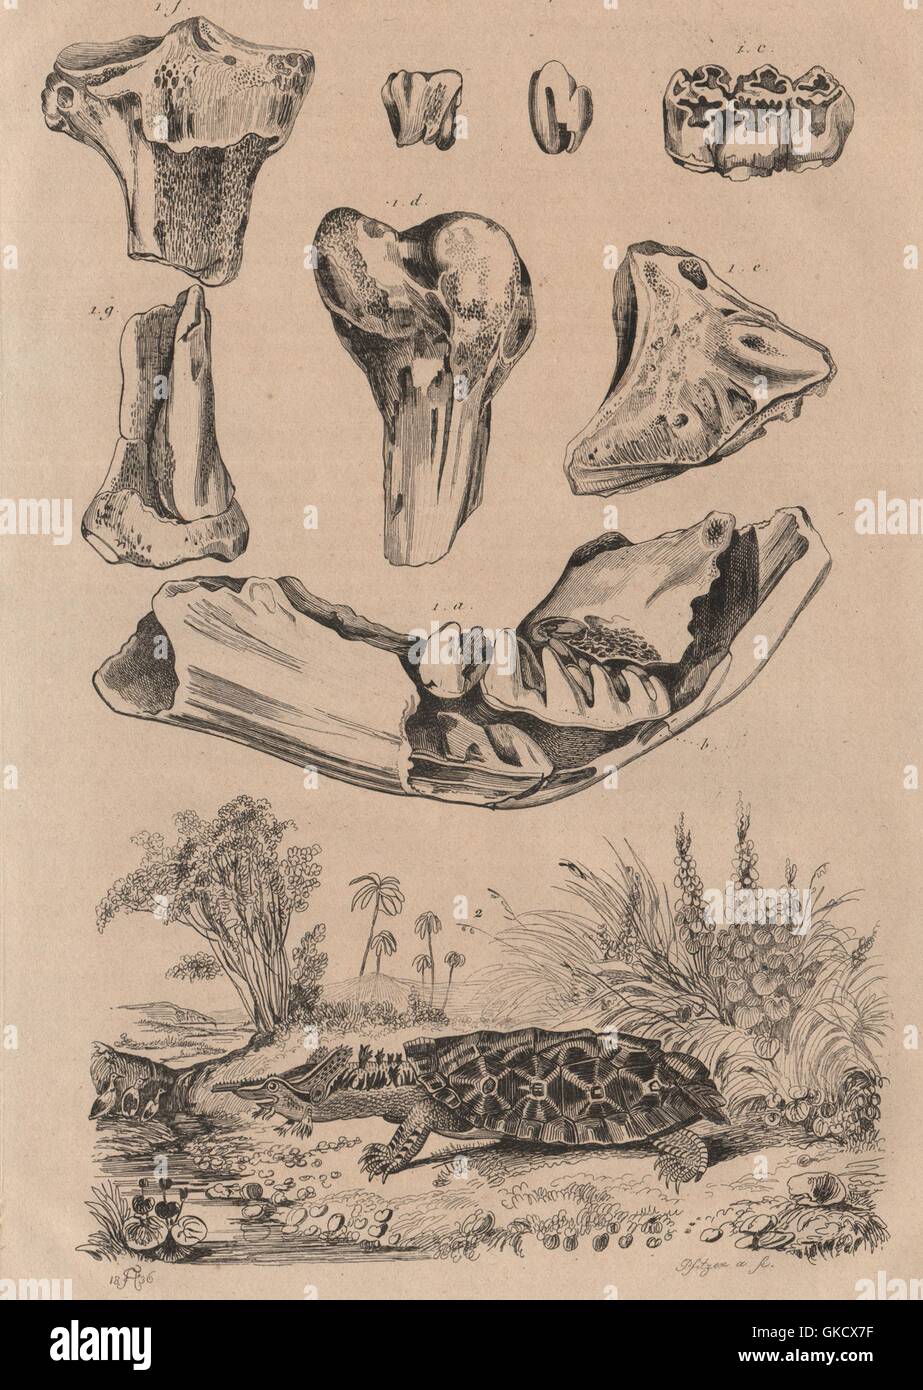 ANIMALS: Mastodon bones (fossils). Matamata turtle, antique print 1834 Stock Photo